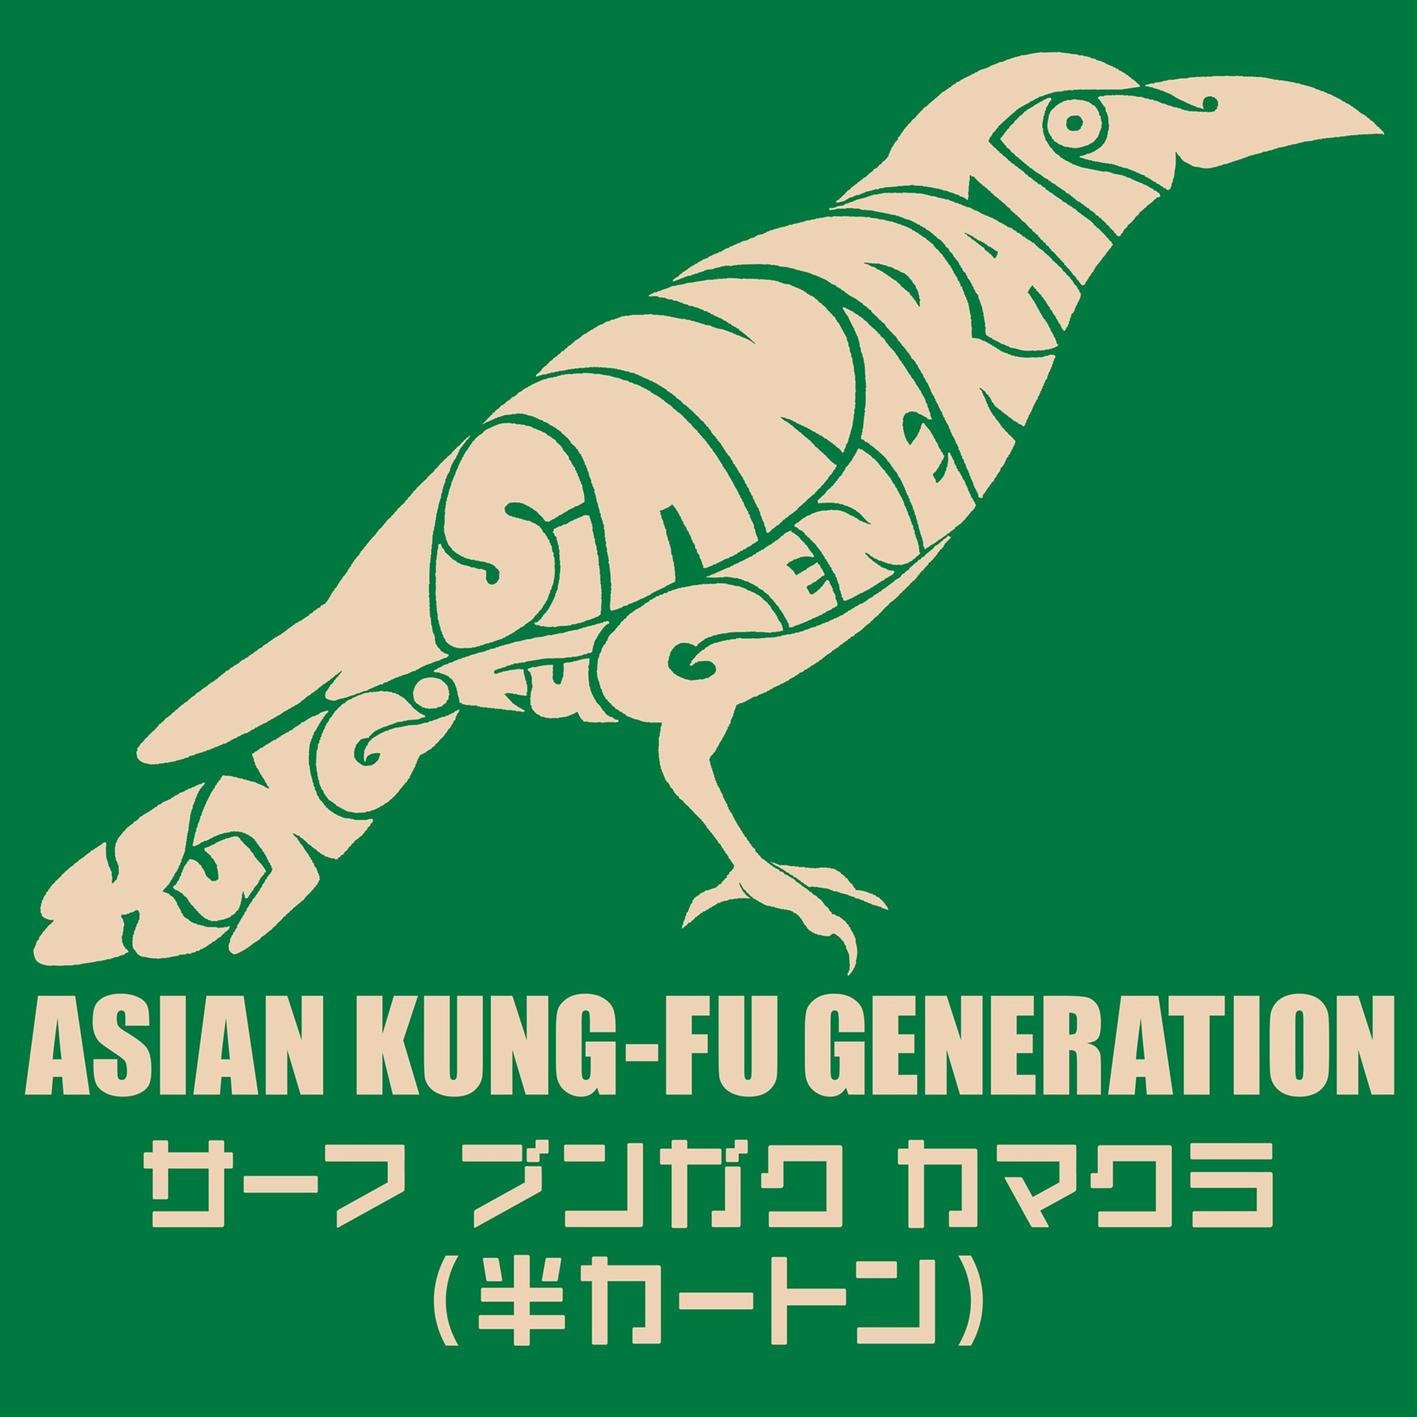 ASIAN KUNG-FU GENERATION - 西方コーストストーリー